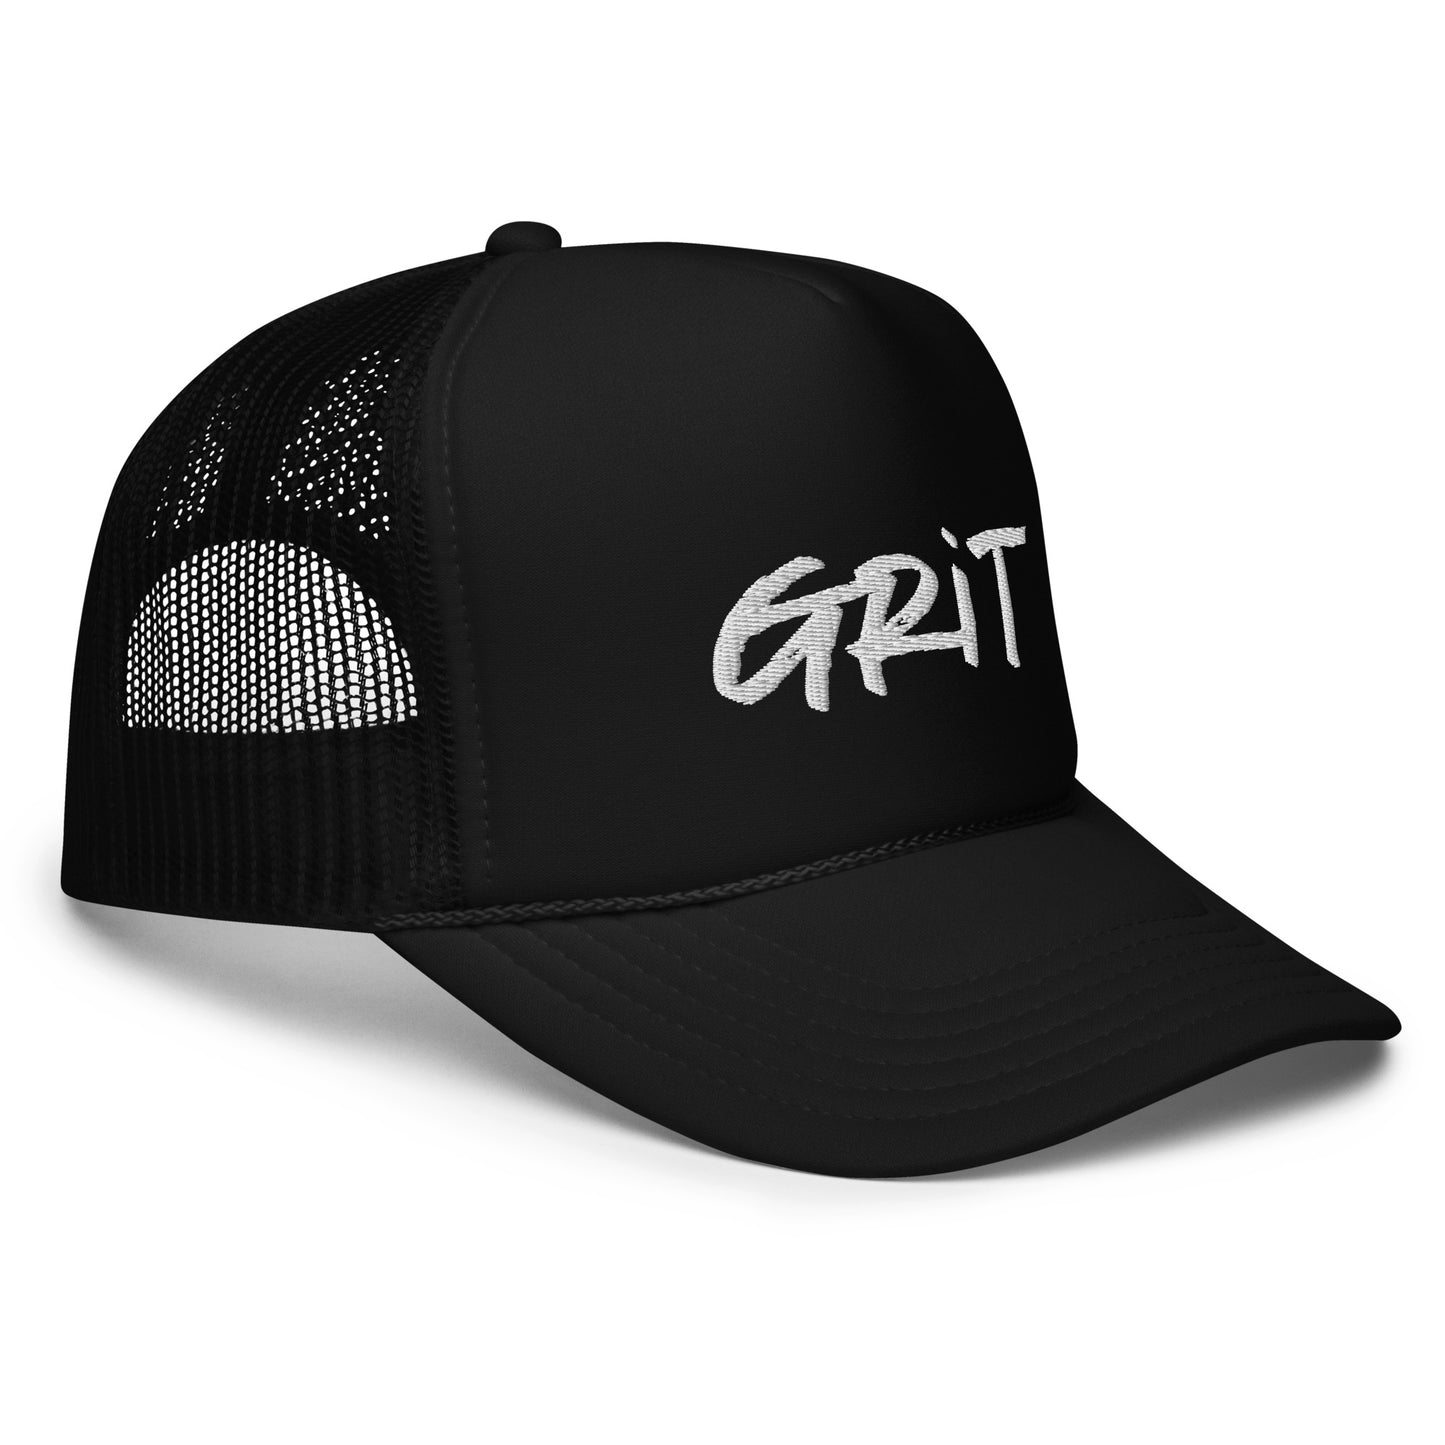 GRIT TRUCKER CAP